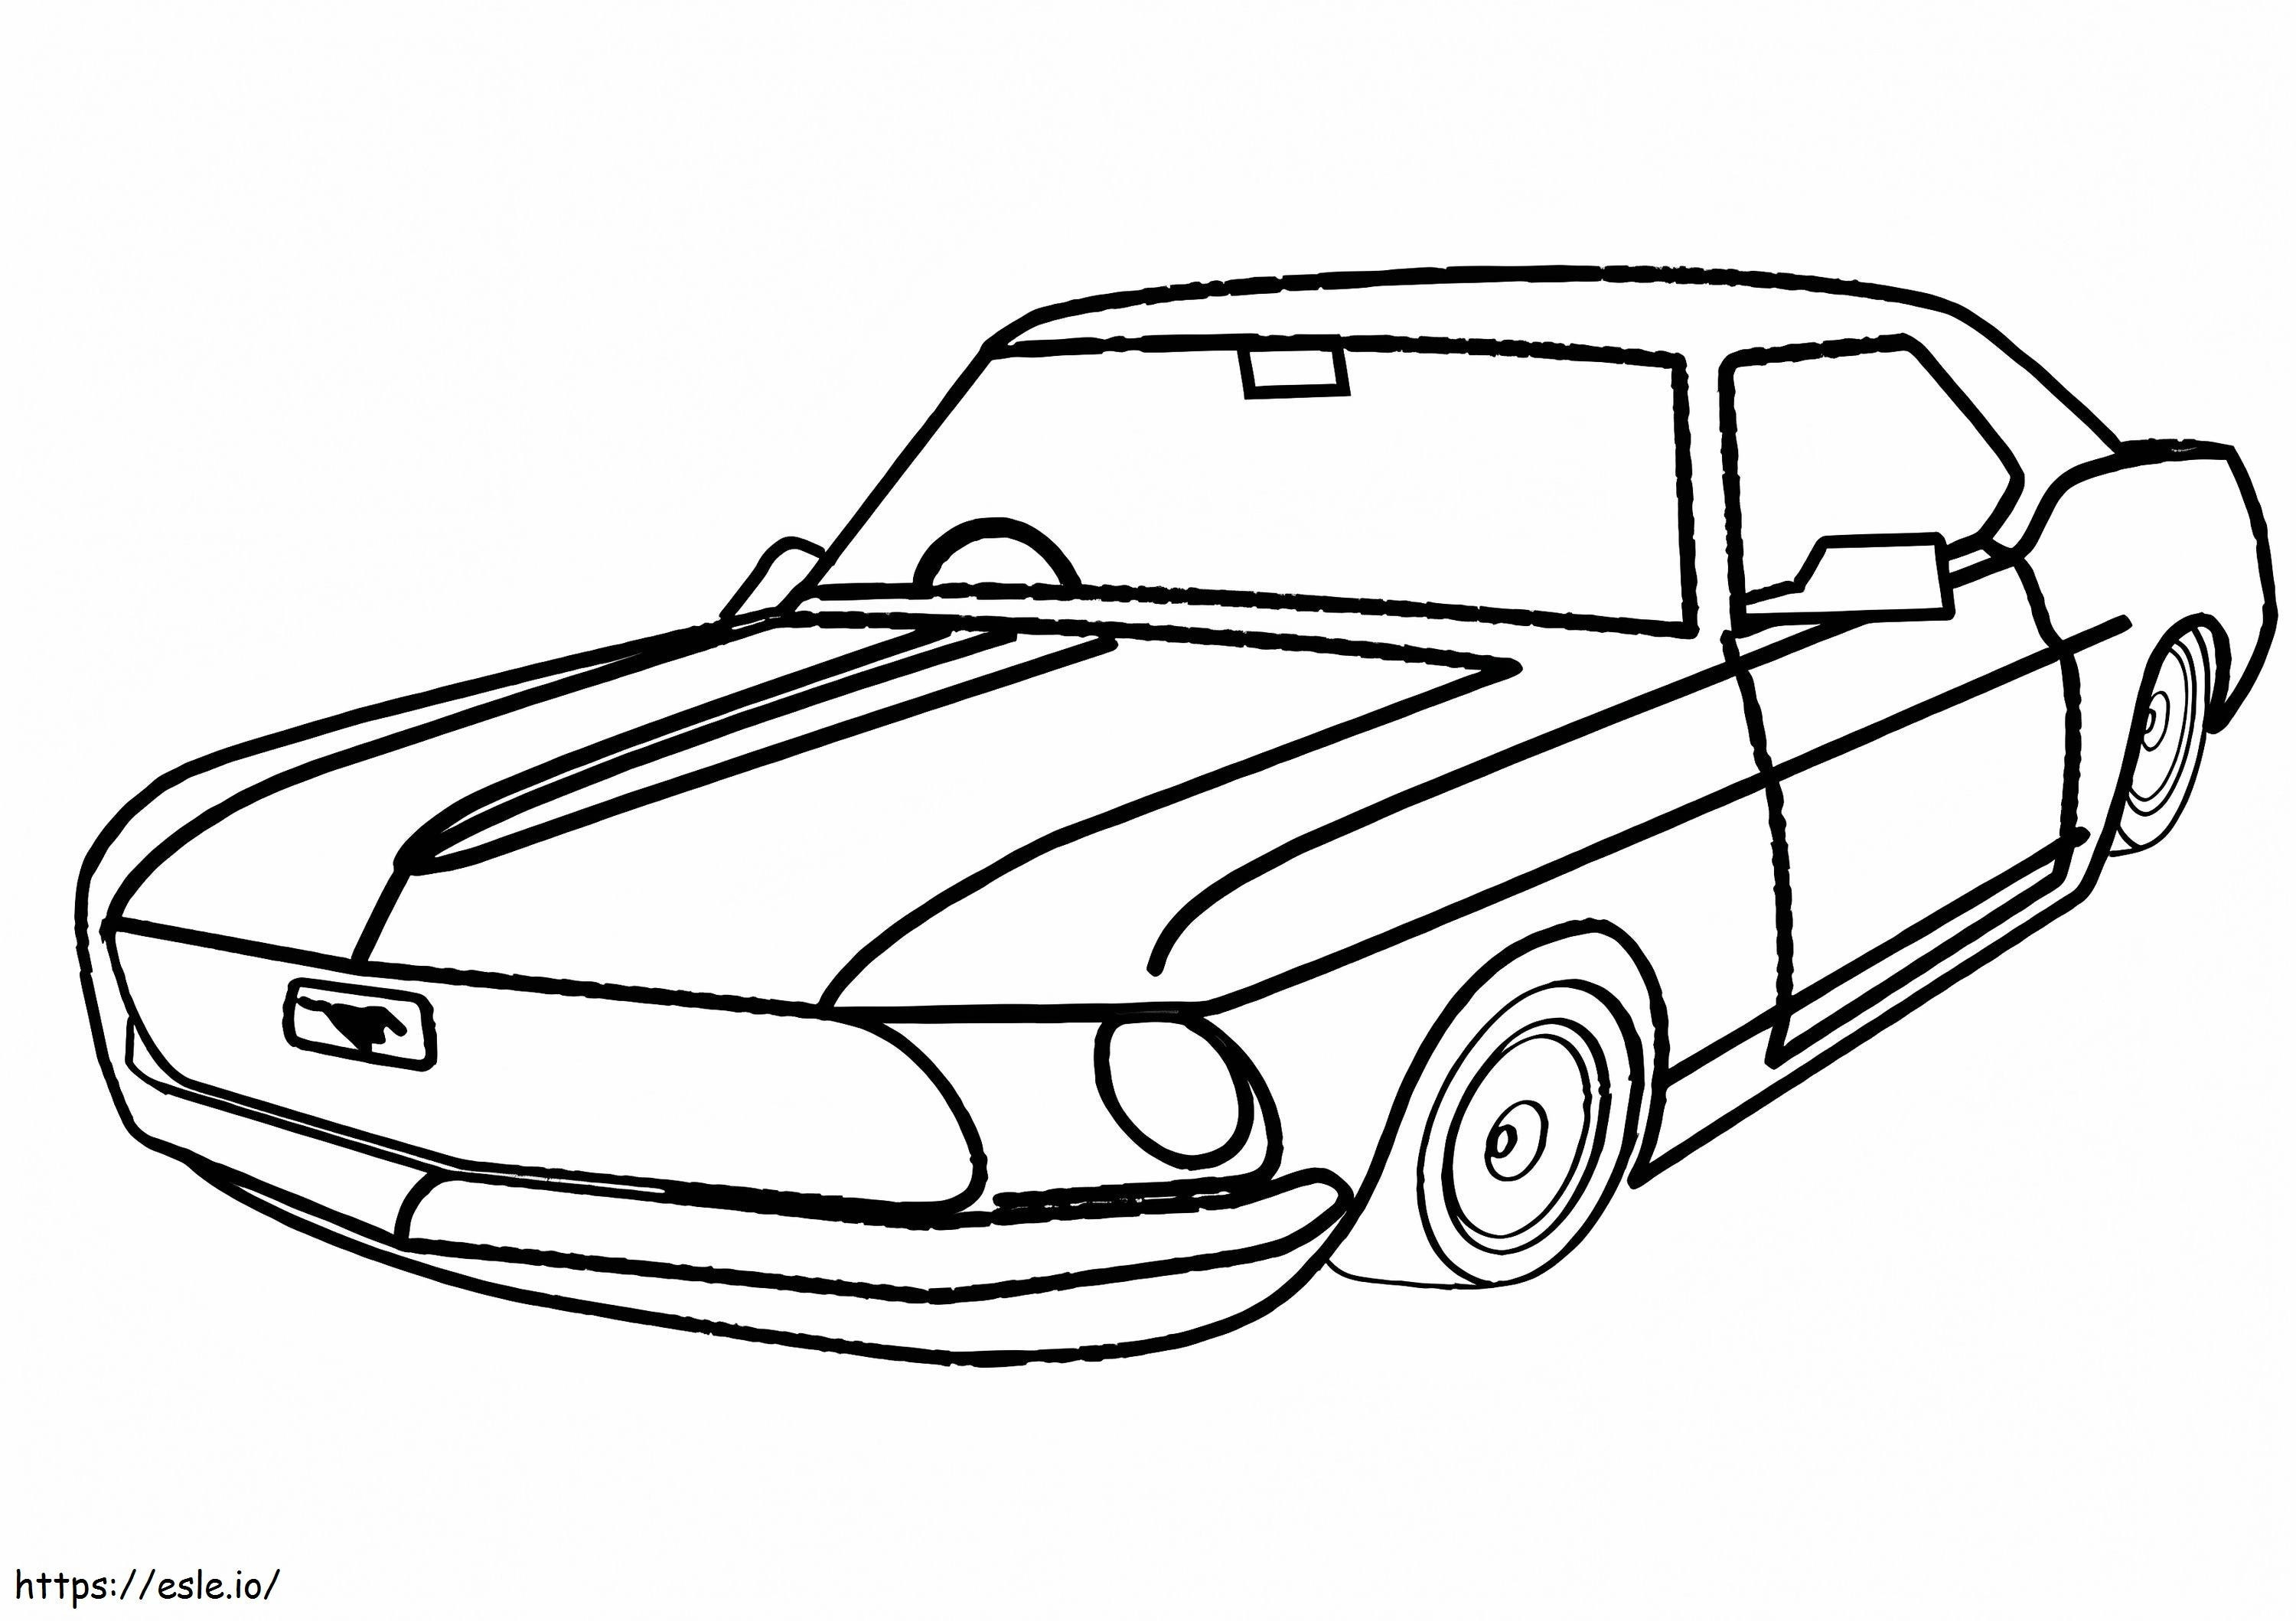 Um Mustang para colorir